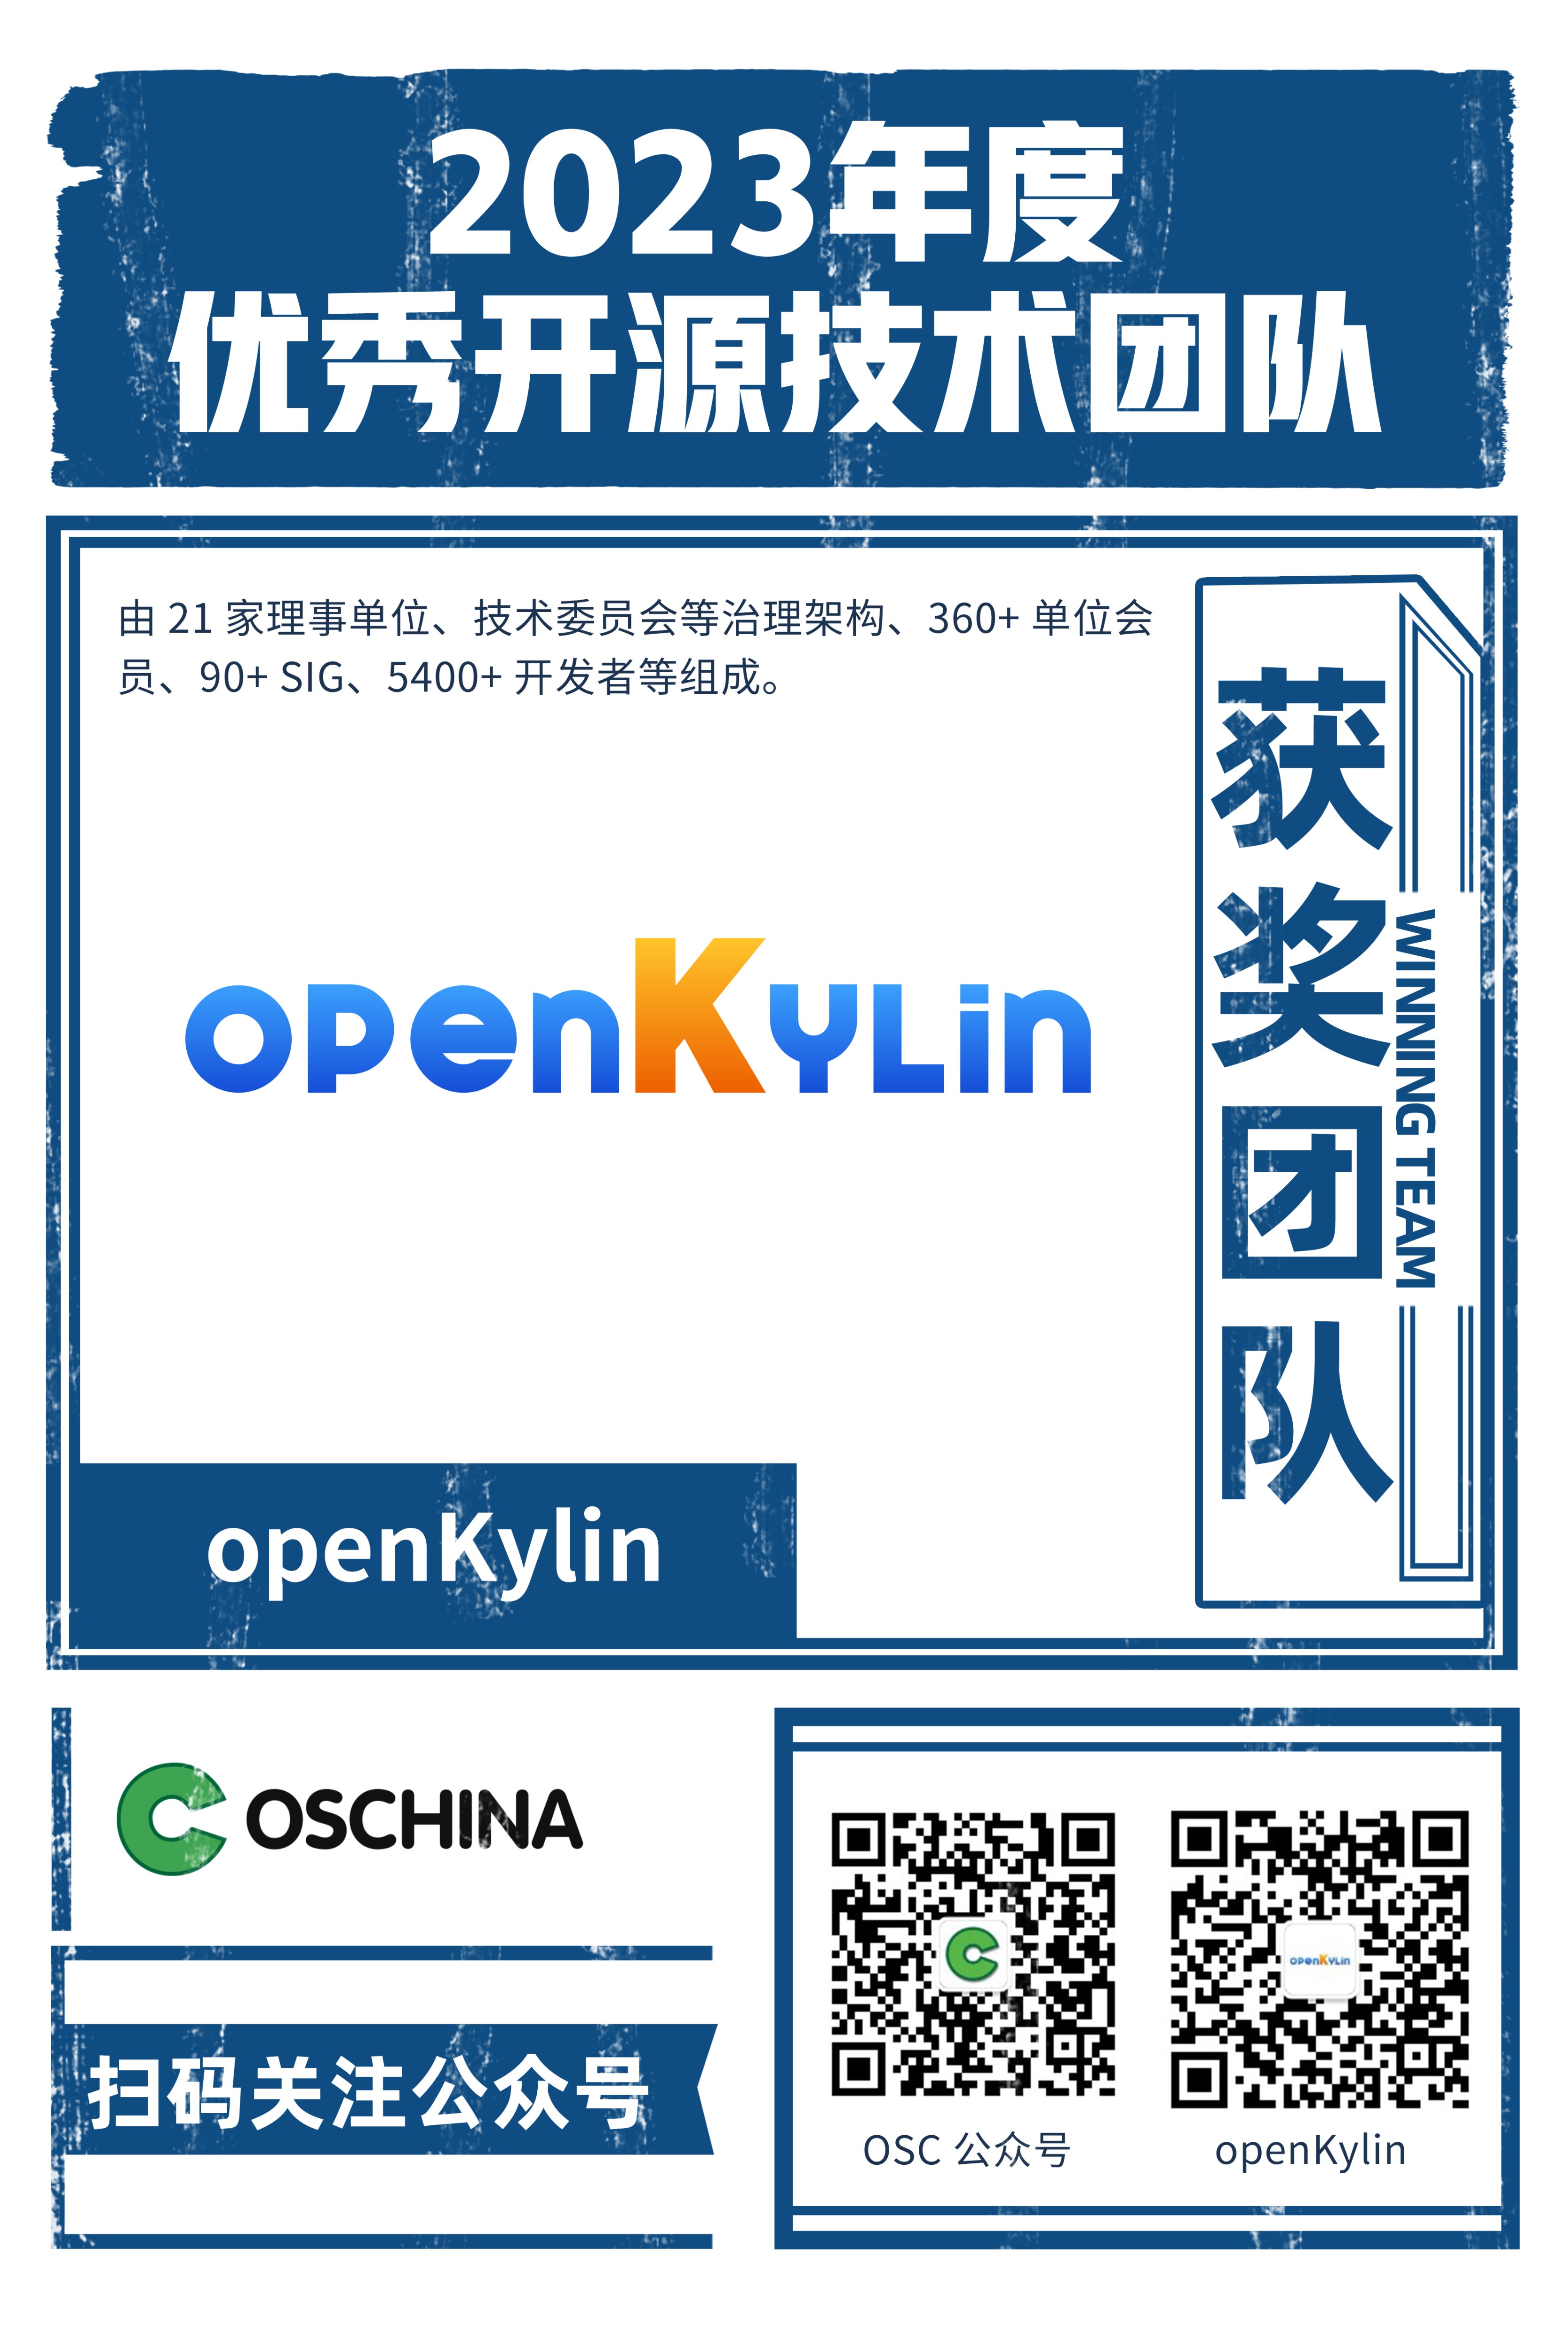 openKylin连续两年入选开源中国“年度优秀开源技术团队